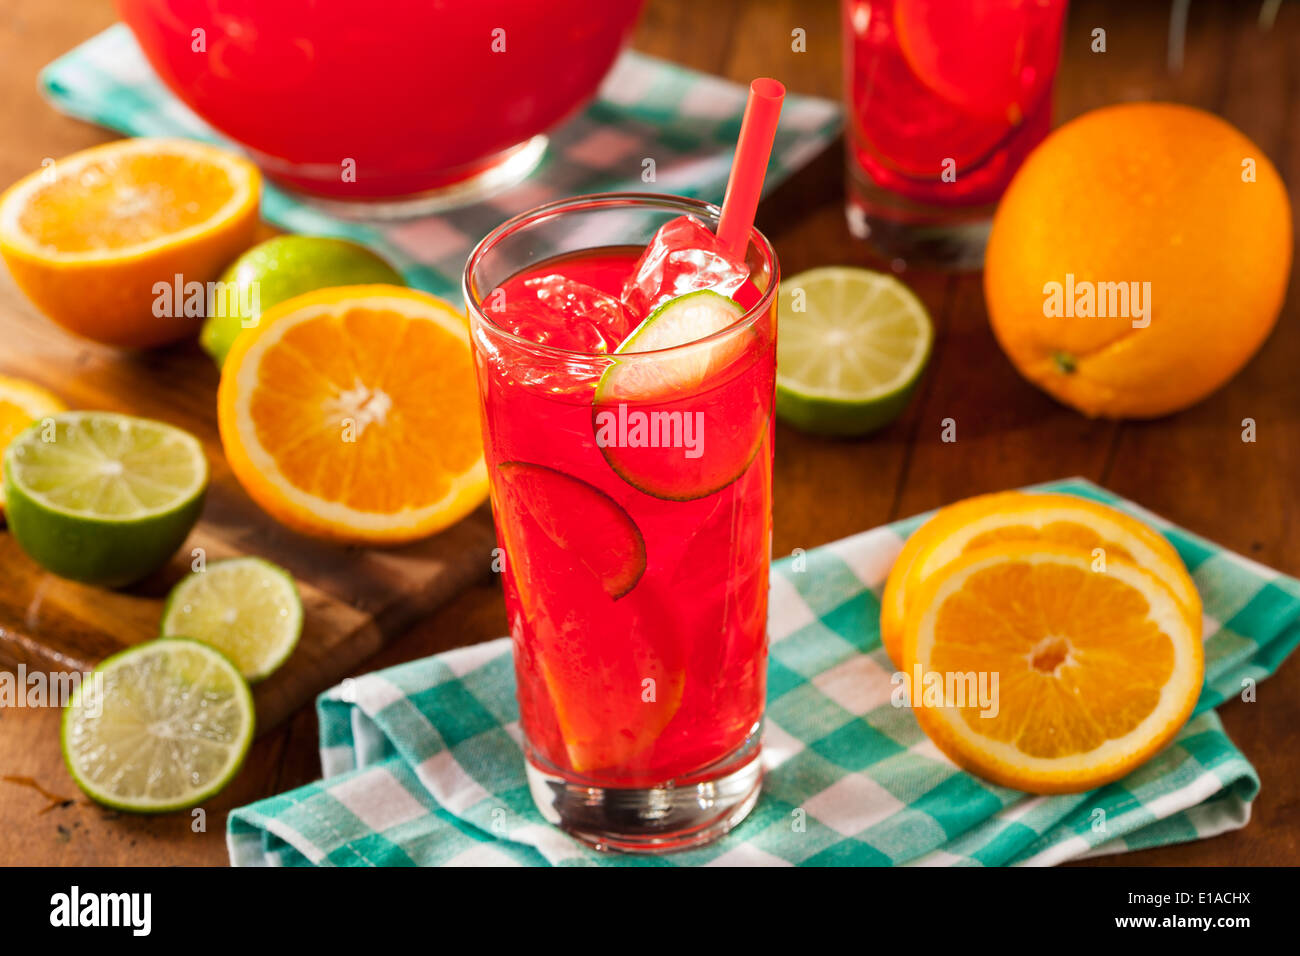 https://c8.alamy.com/comp/E1ACHX/refreshing-cold-fruit-punch-with-berries-and-oranges-E1ACHX.jpg